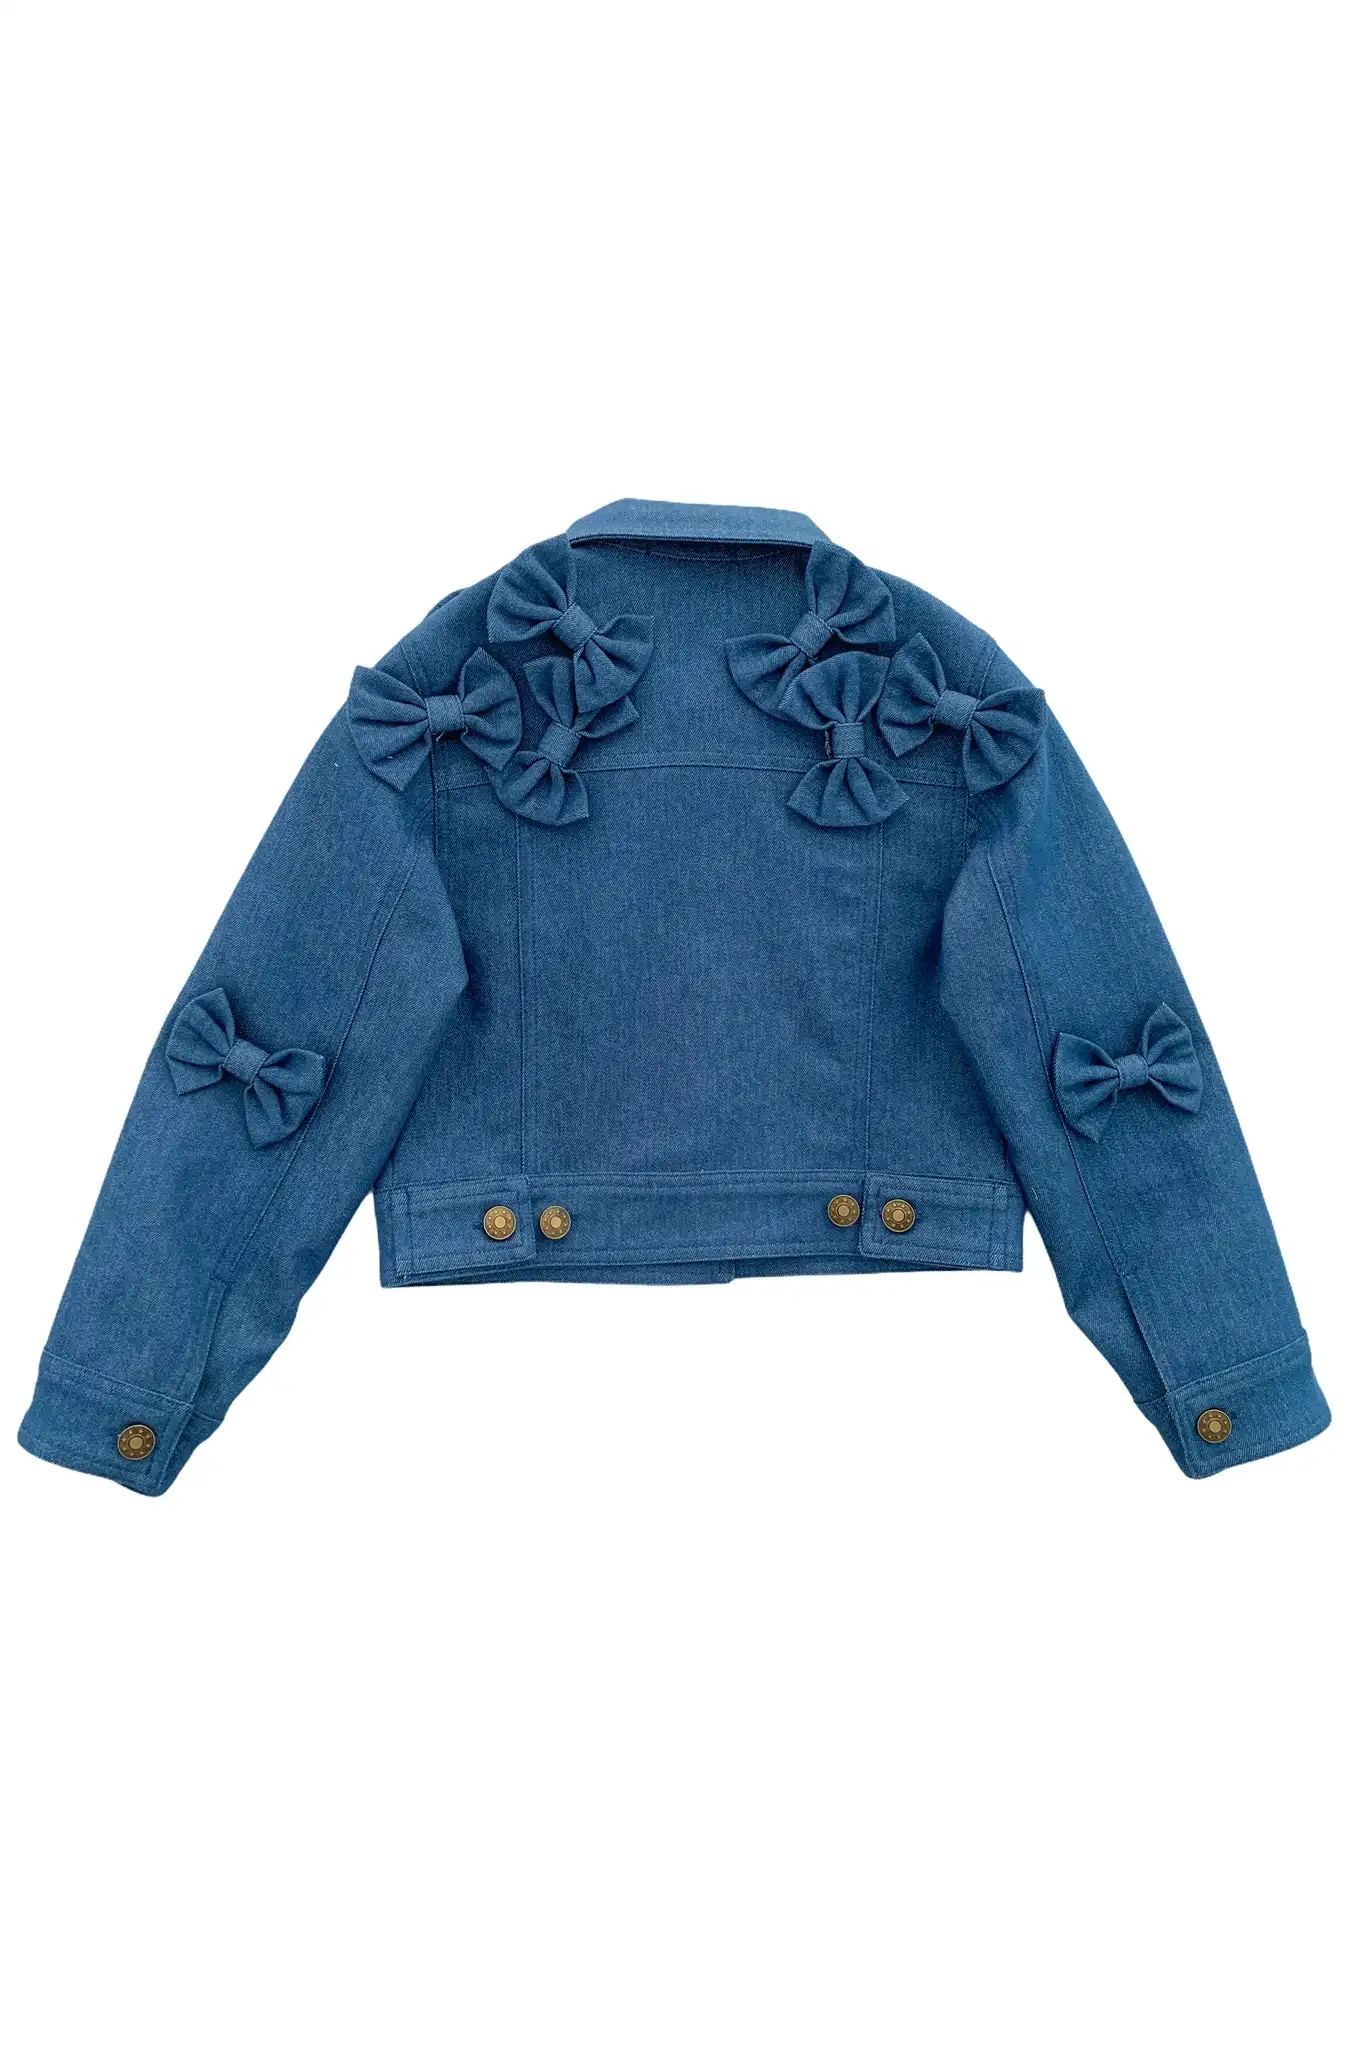 Girls Jean Jacket Classic Long Sleeve Cute Denim Jacket for Toddler Kids